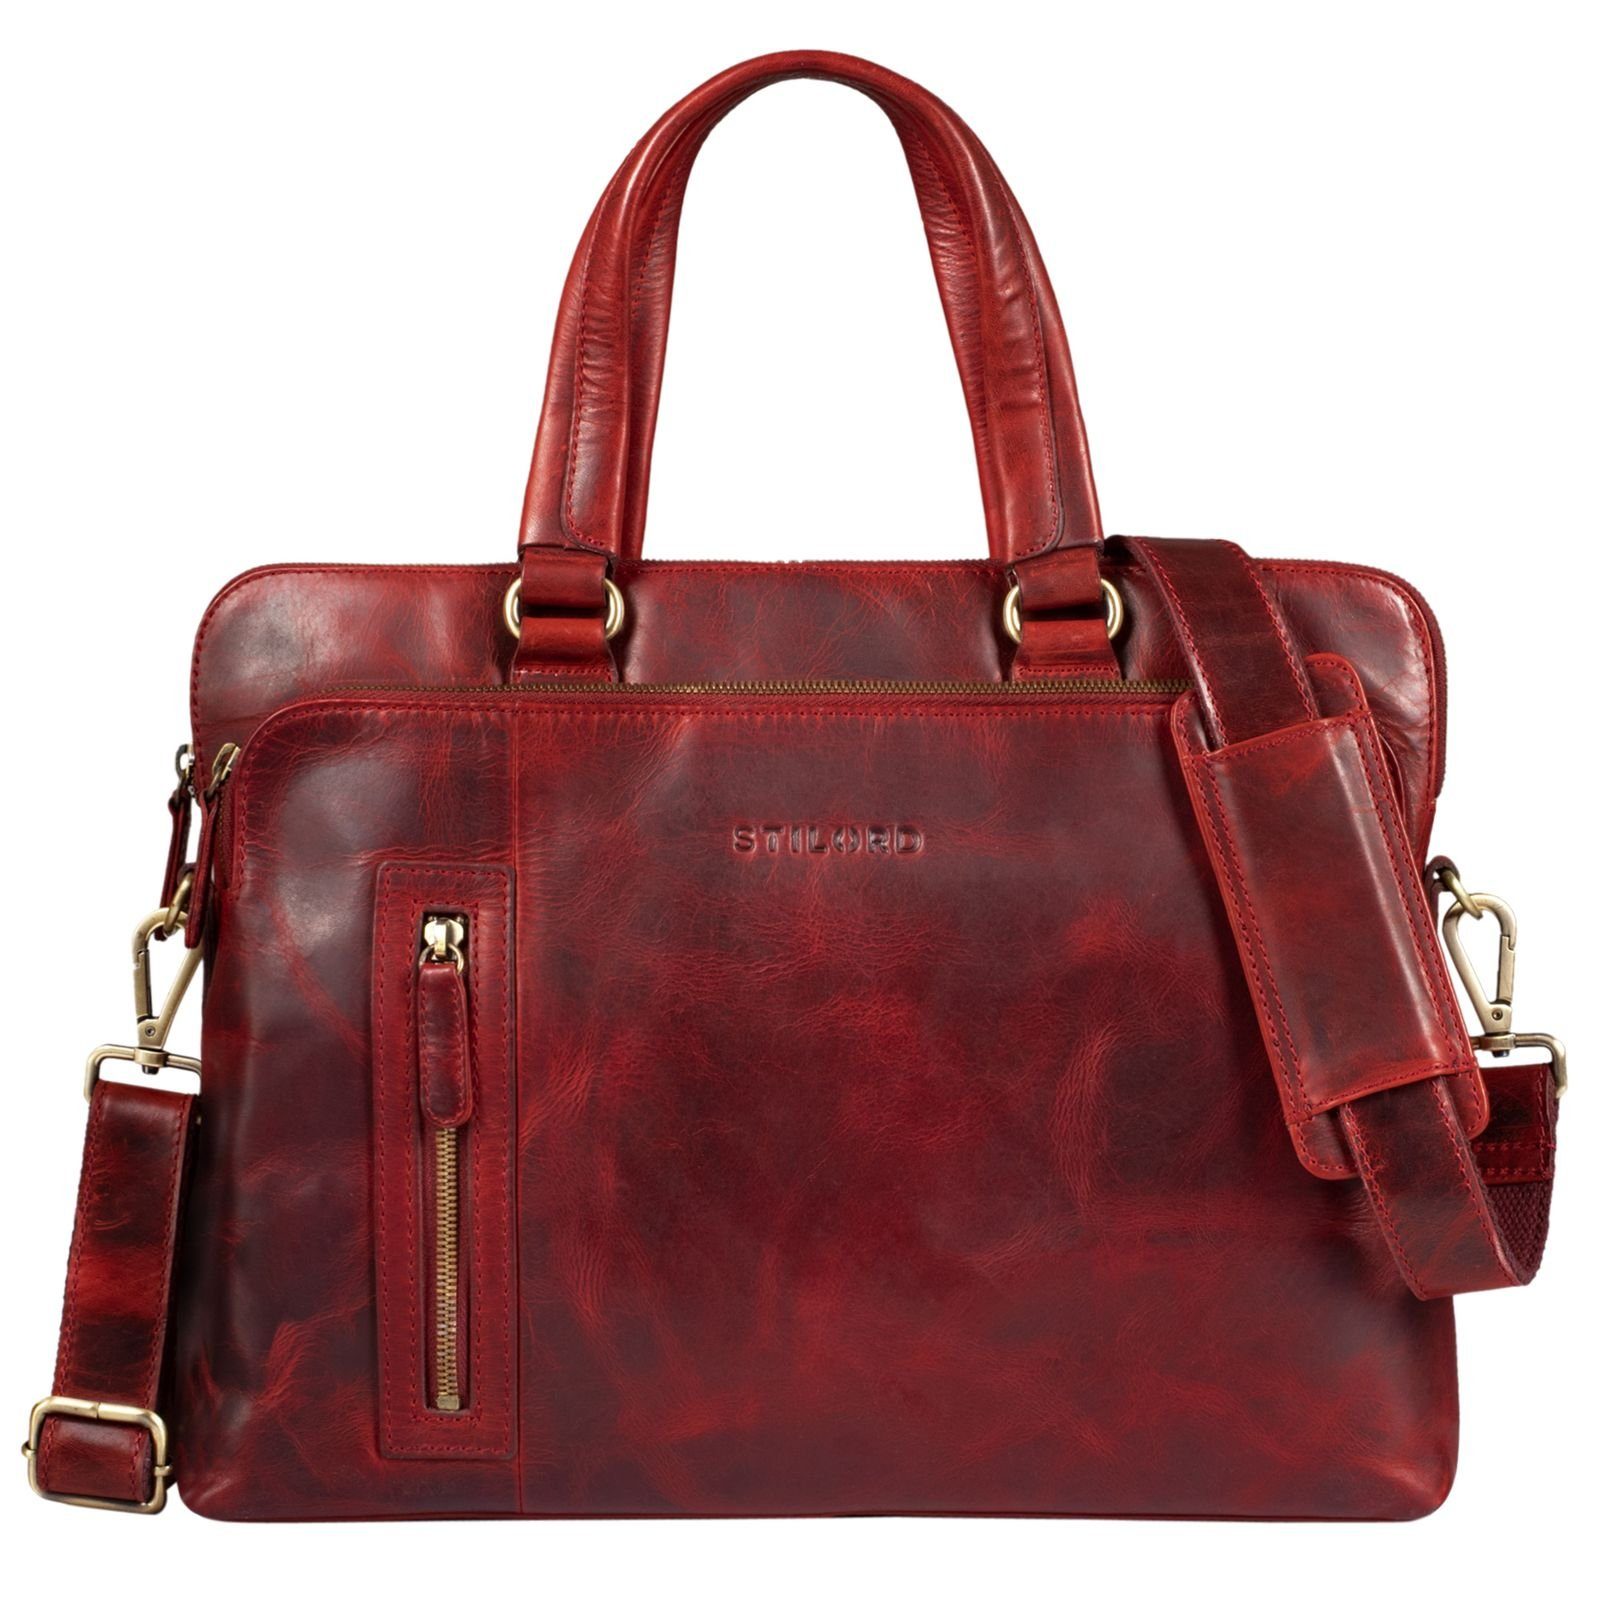 STILORD Handtasche "Lory" Aktentasche Damen Leder kara - rot | Handtaschen